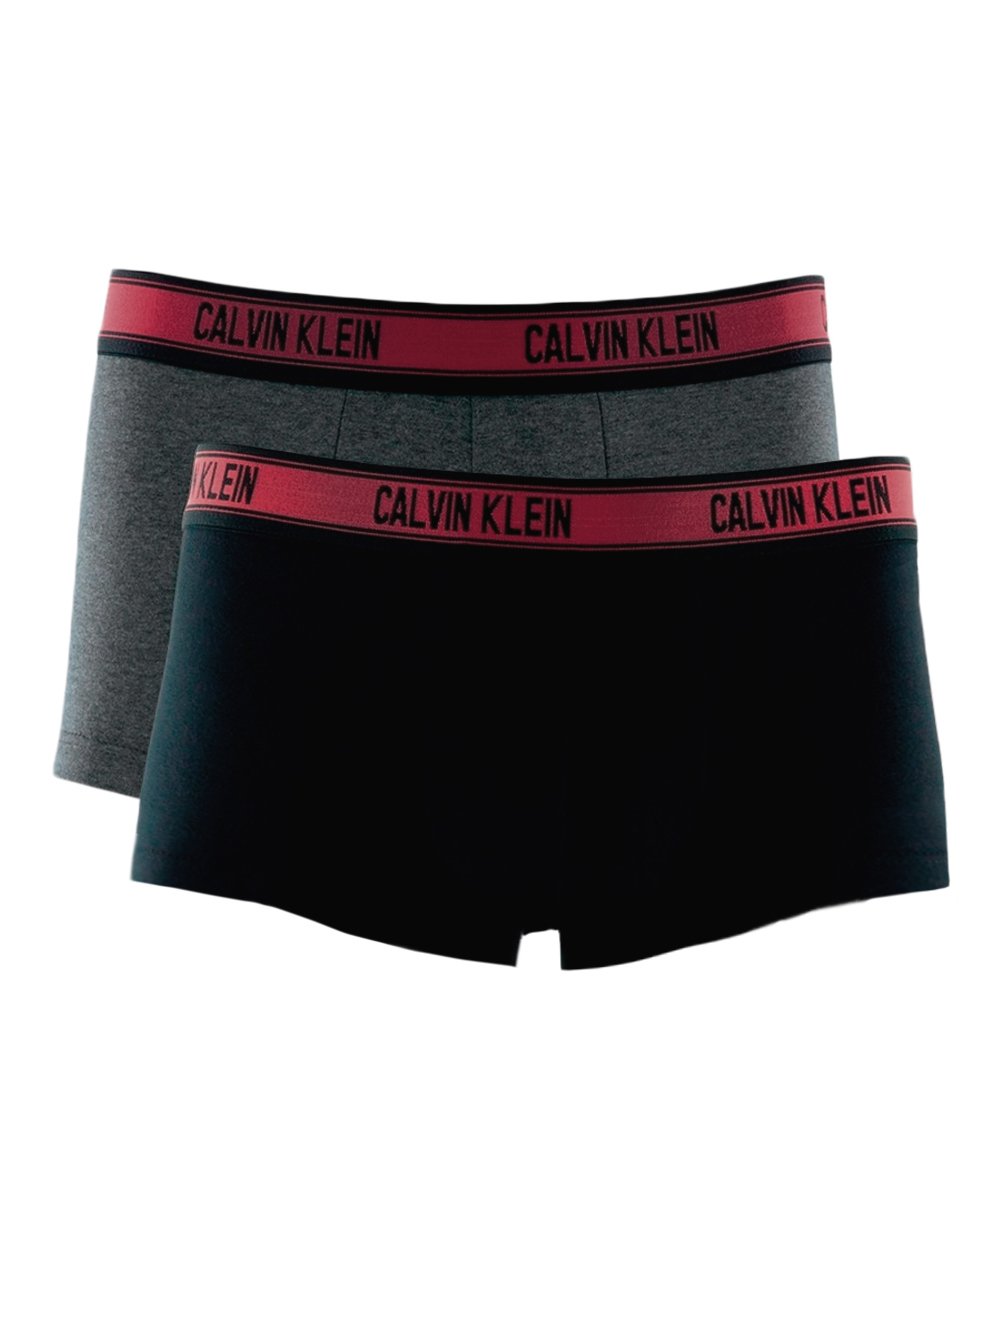 Cueca Calvin Klein Low Rise Mag Preta e Cinza Pack C11.09 PT00 2UN